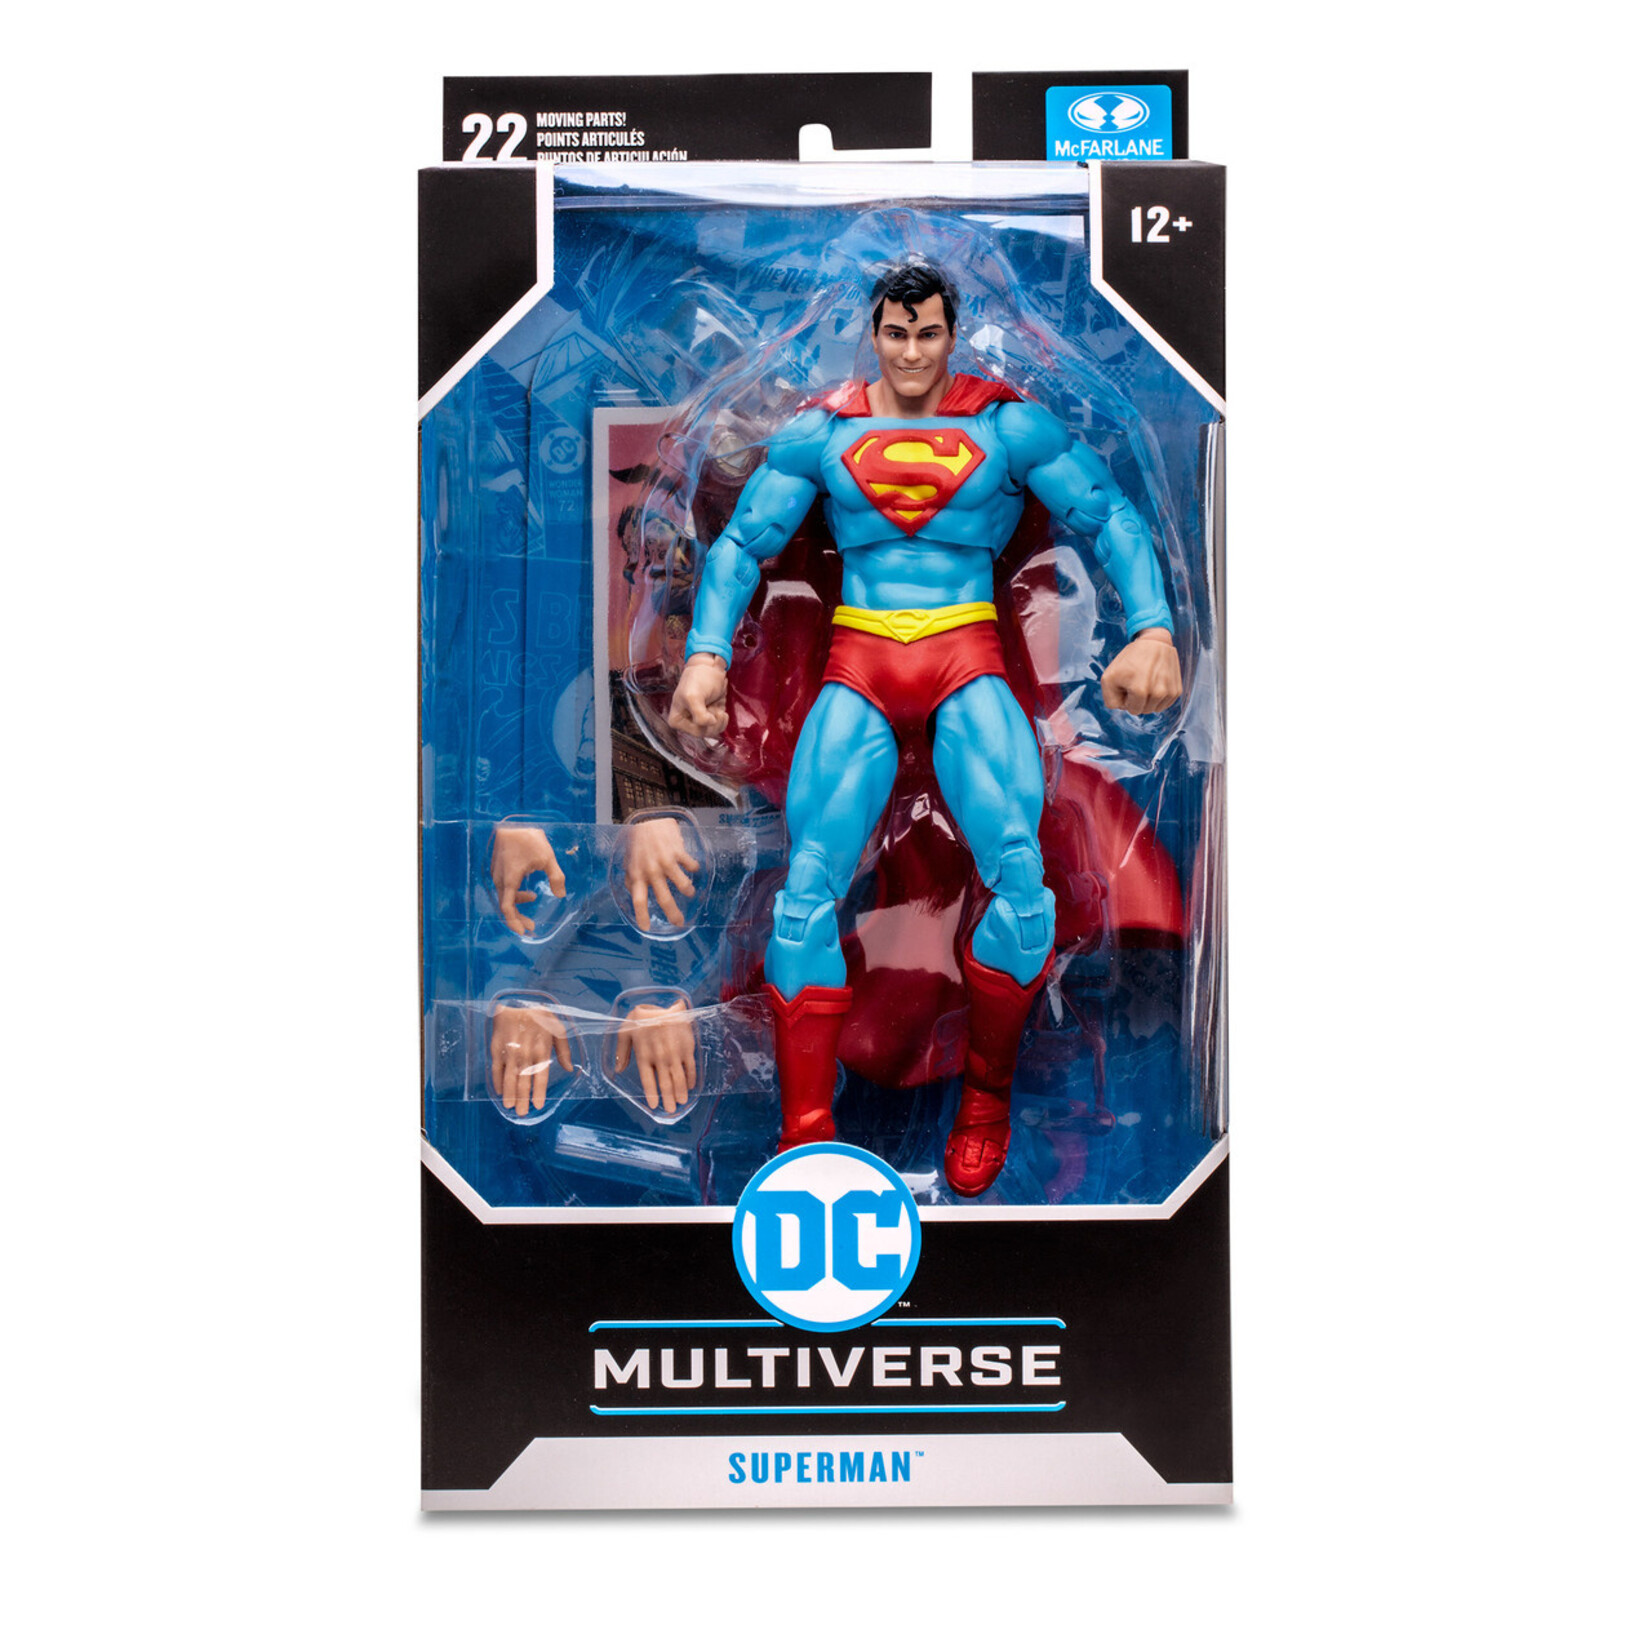 McFarlane Toys McFarlane Toys DC Comics Multiverse Superman (DC Classic) Action Figure 18 cm